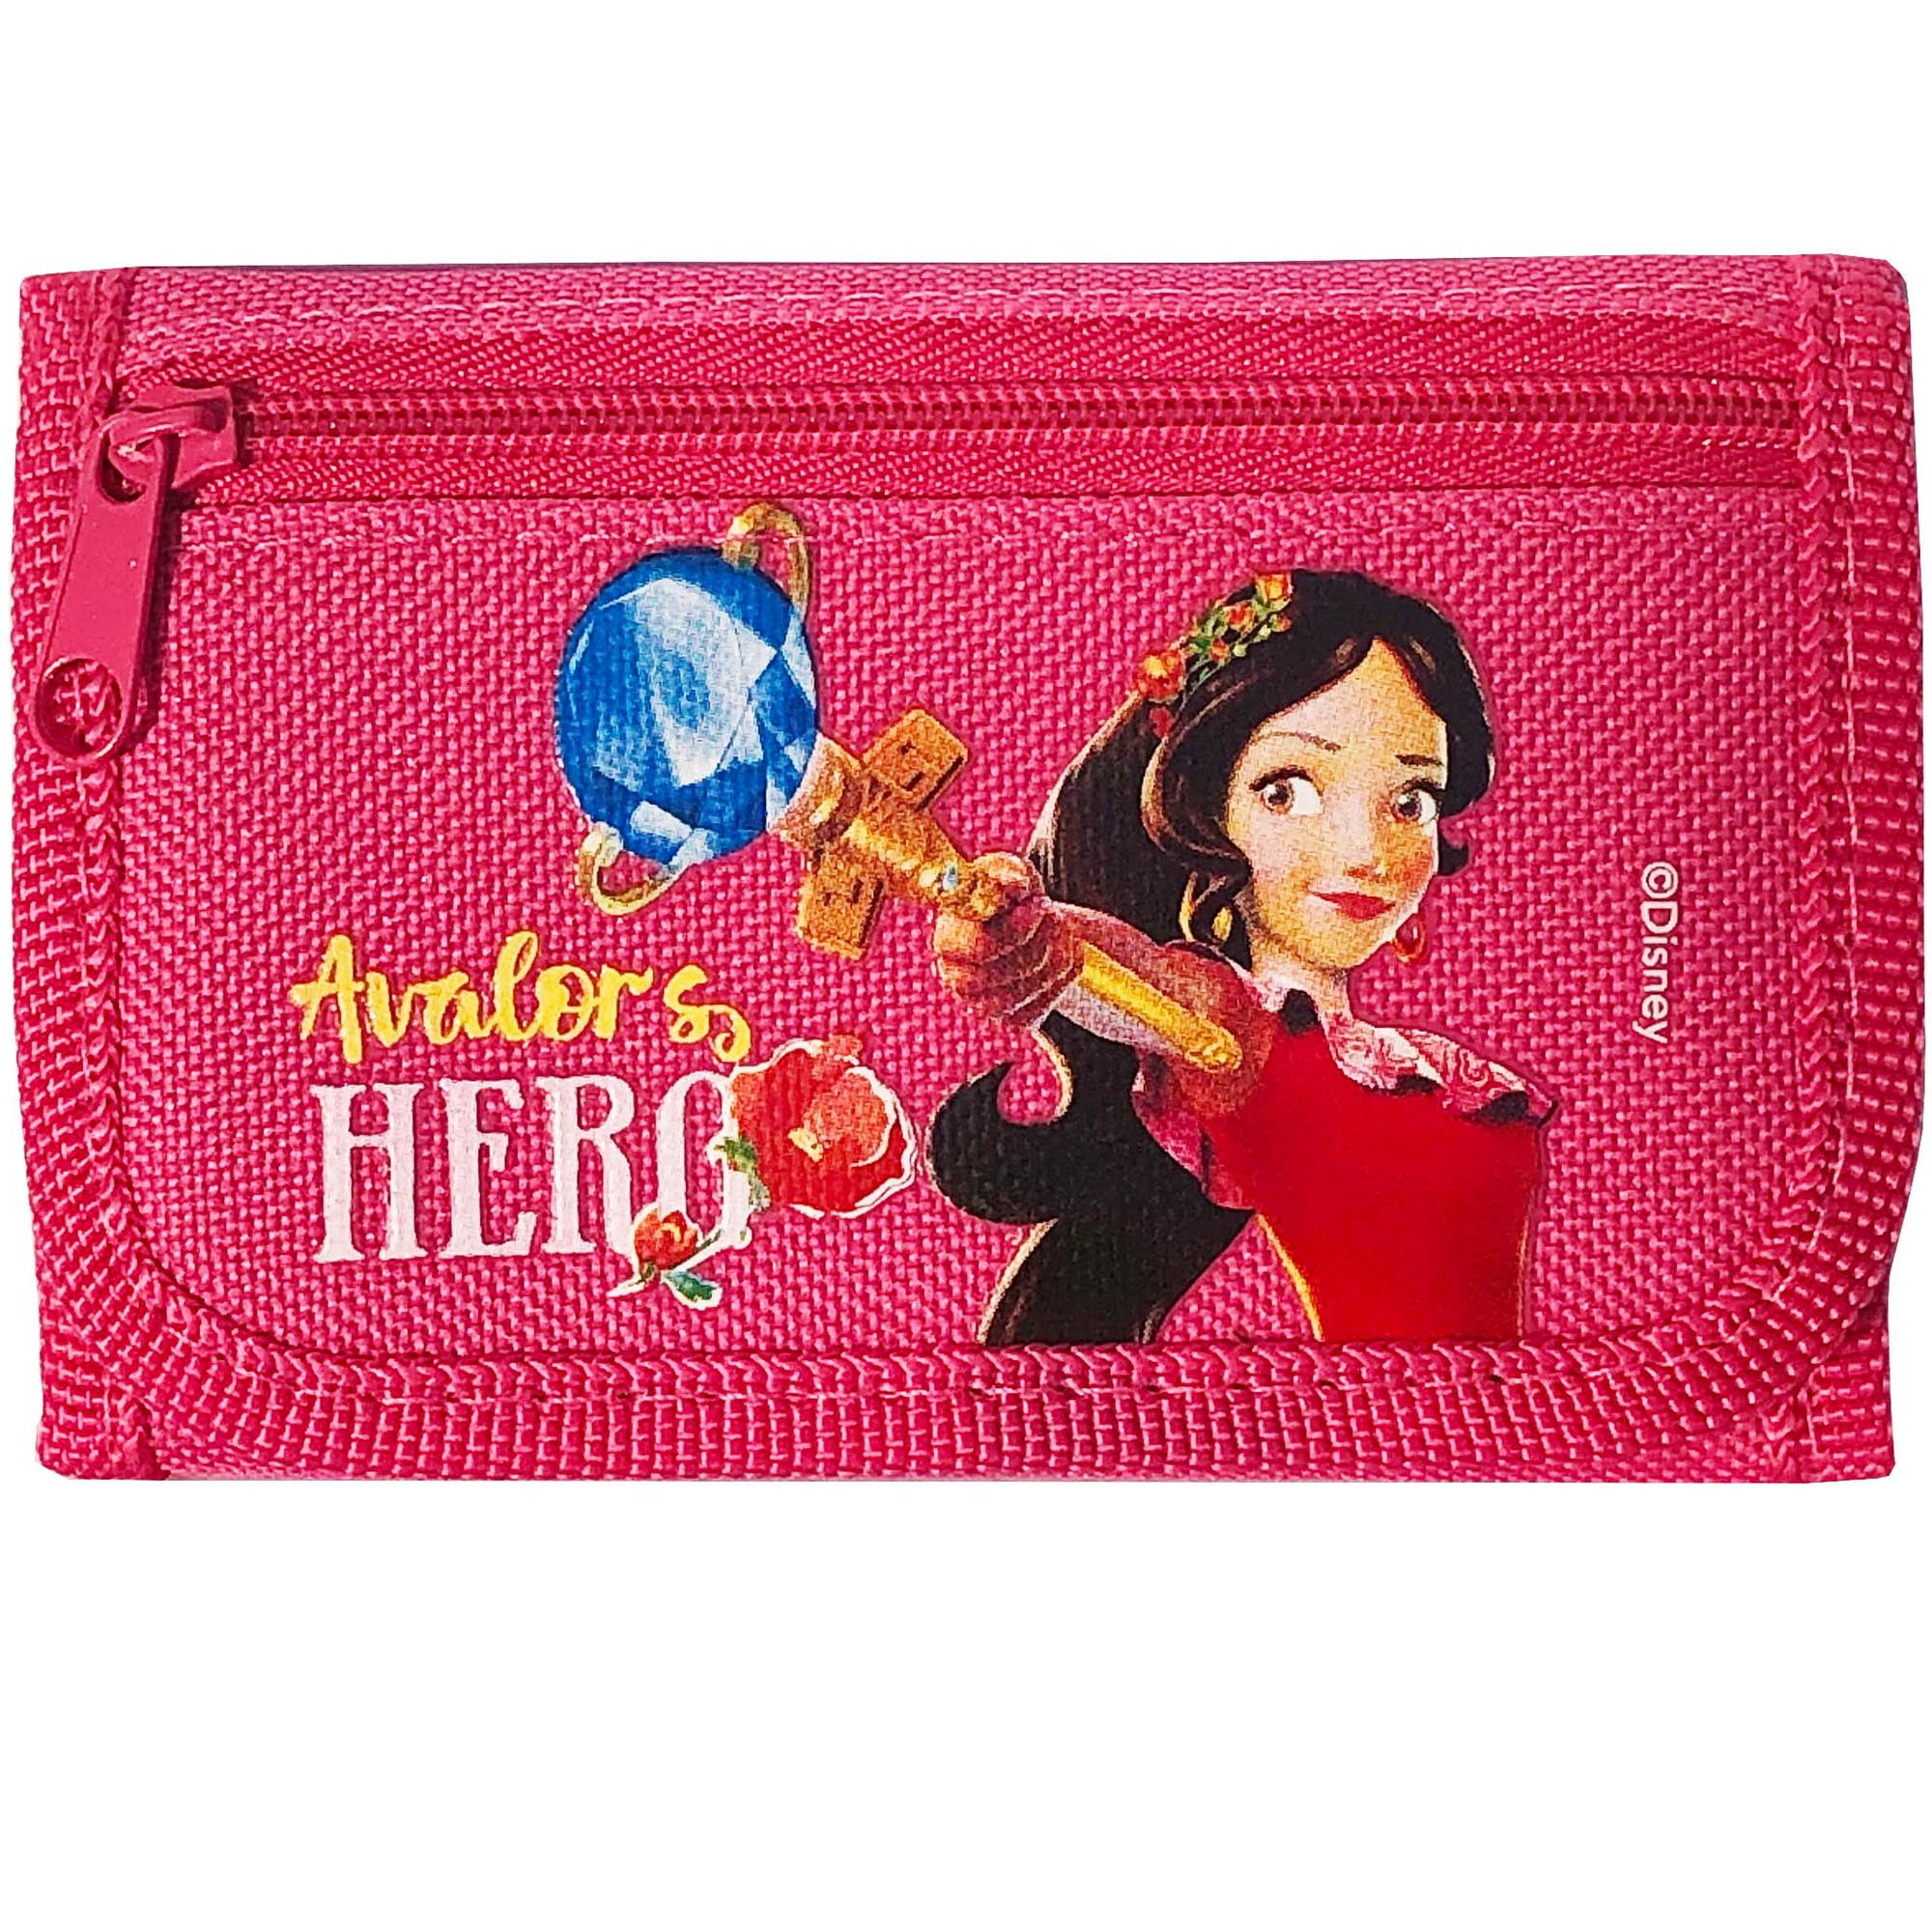 Disney Frozen Destiny Authentic Licensed Canvas Trifold Pink Wallet for Children 